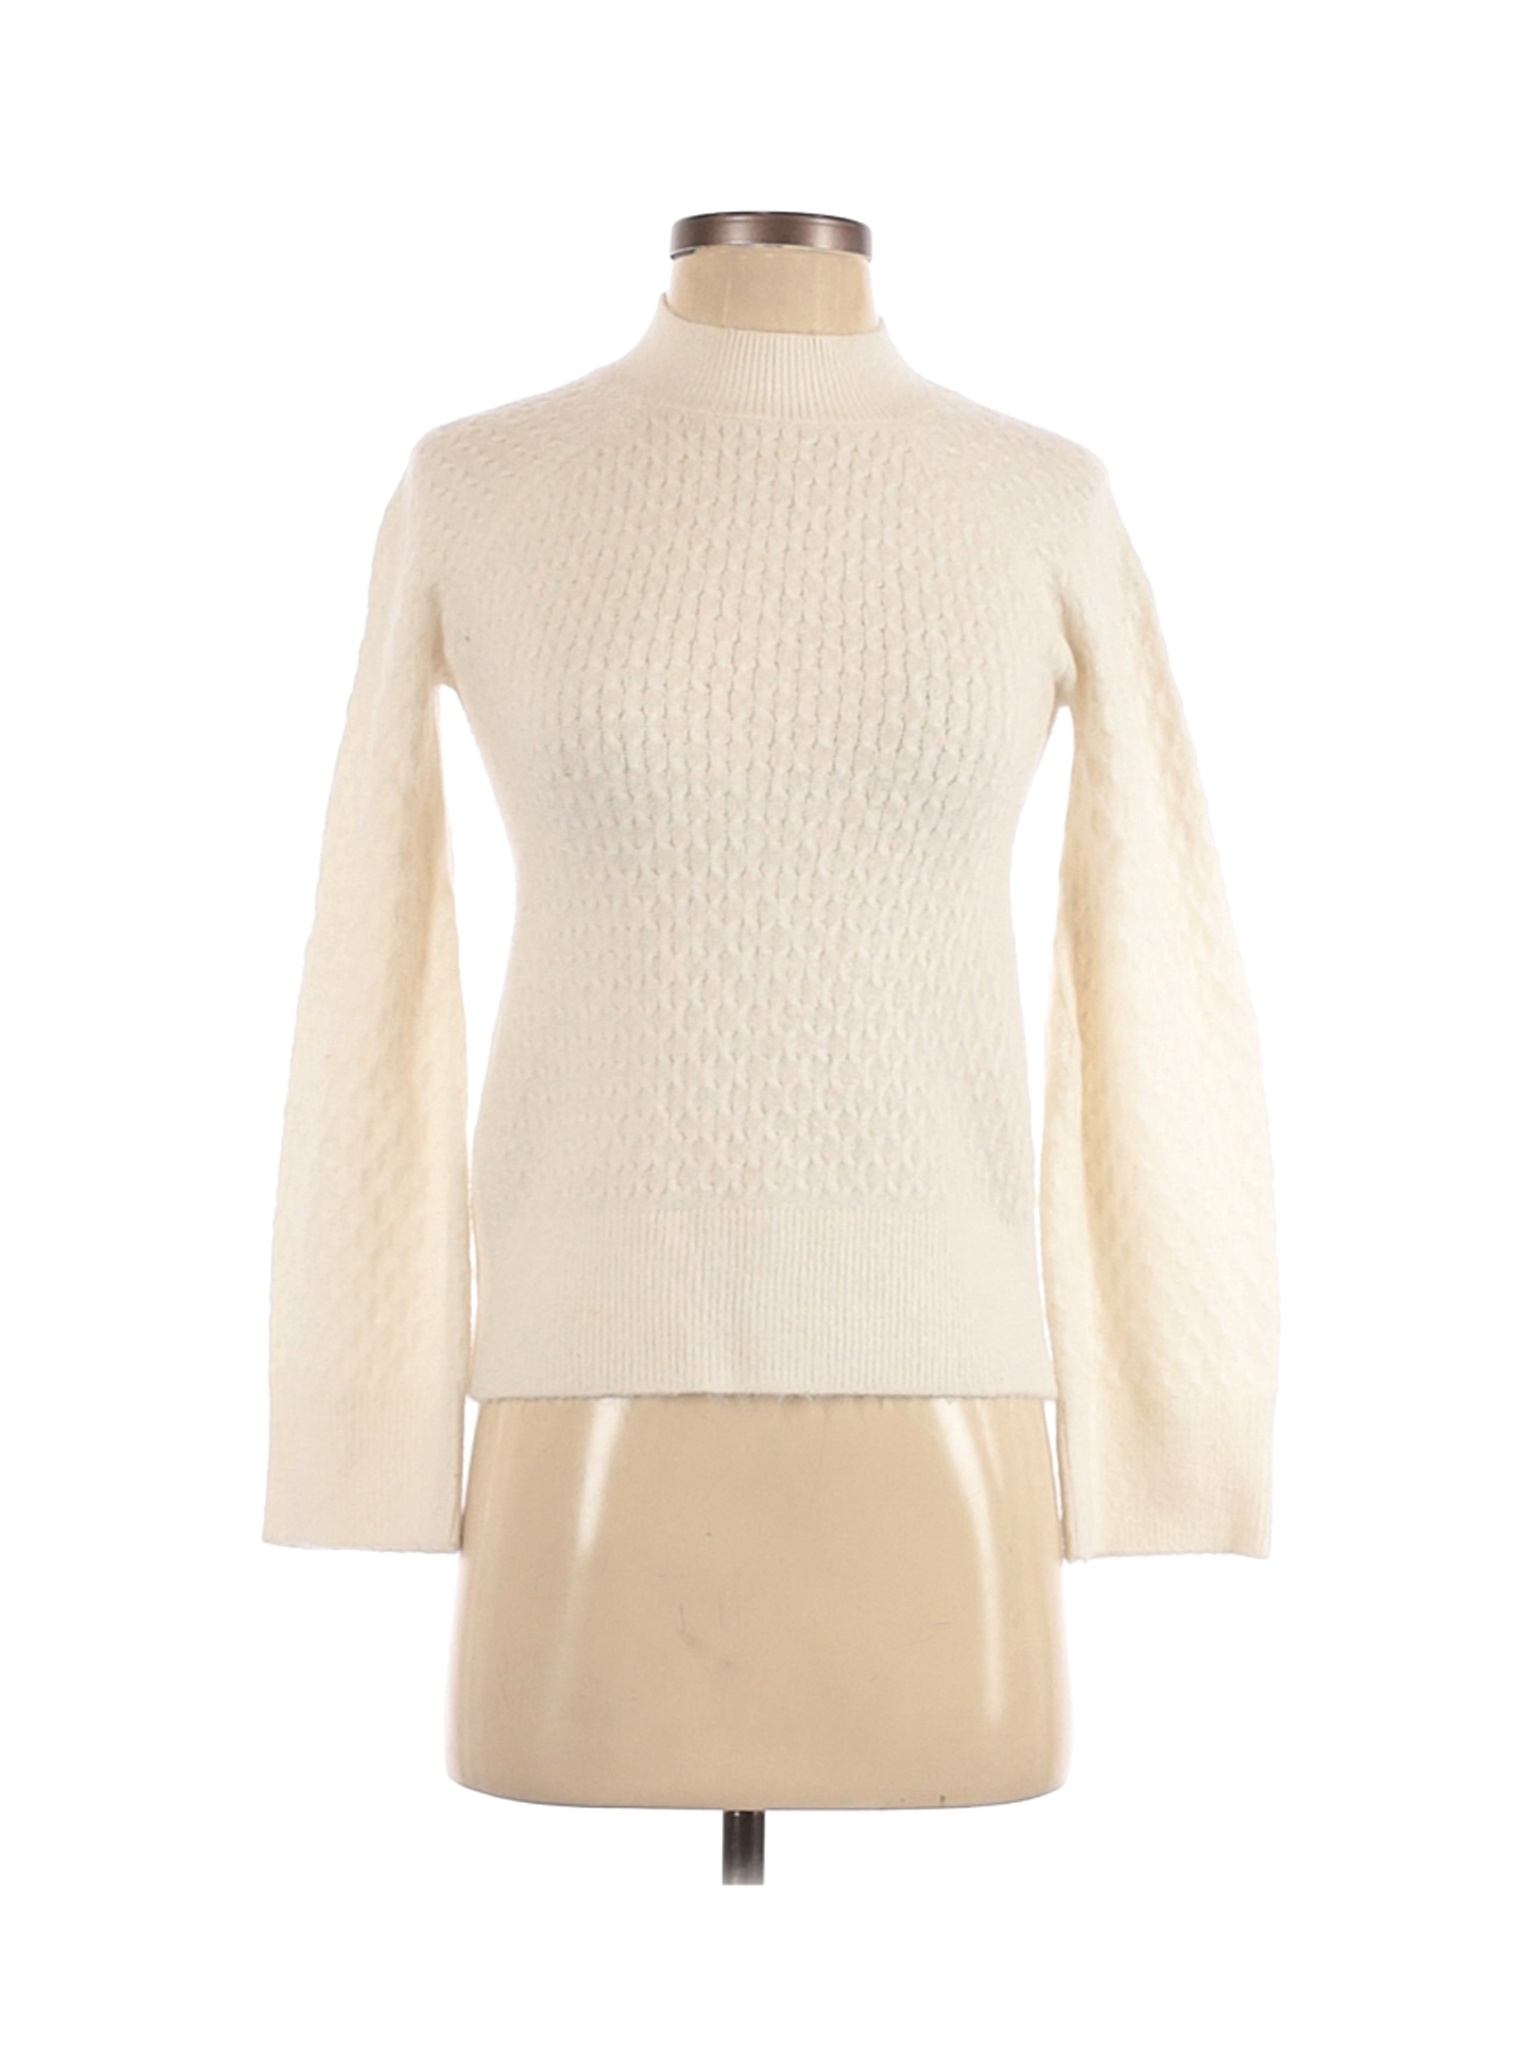 Ann Taylor LOFT Women Ivory Pullover Sweater XXS Petites | eBay